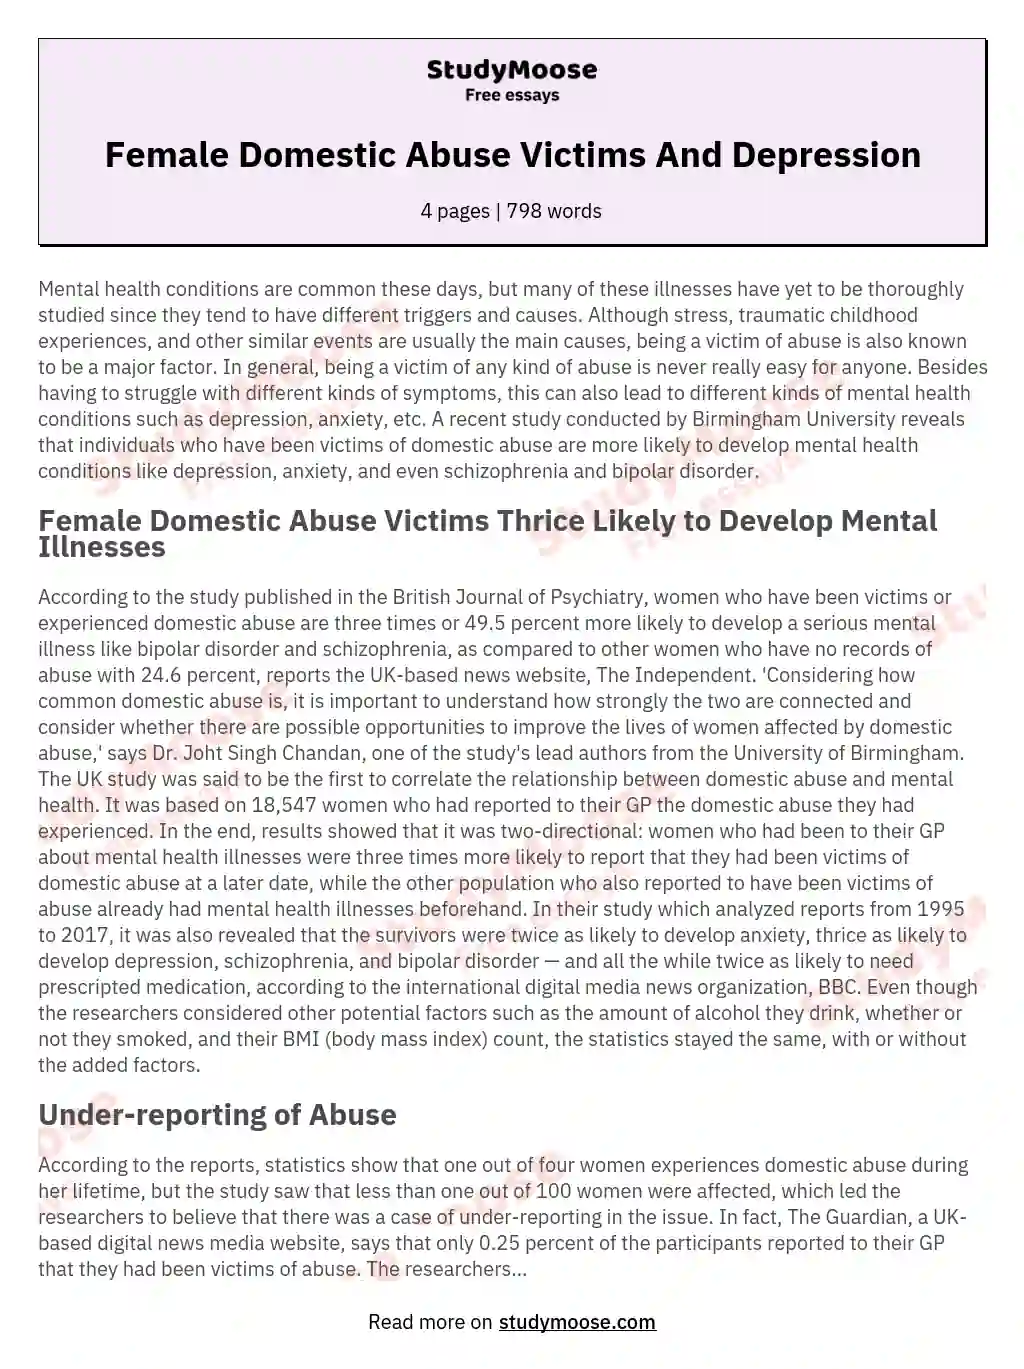 Female Domestic Abuse Victims And Depression essay